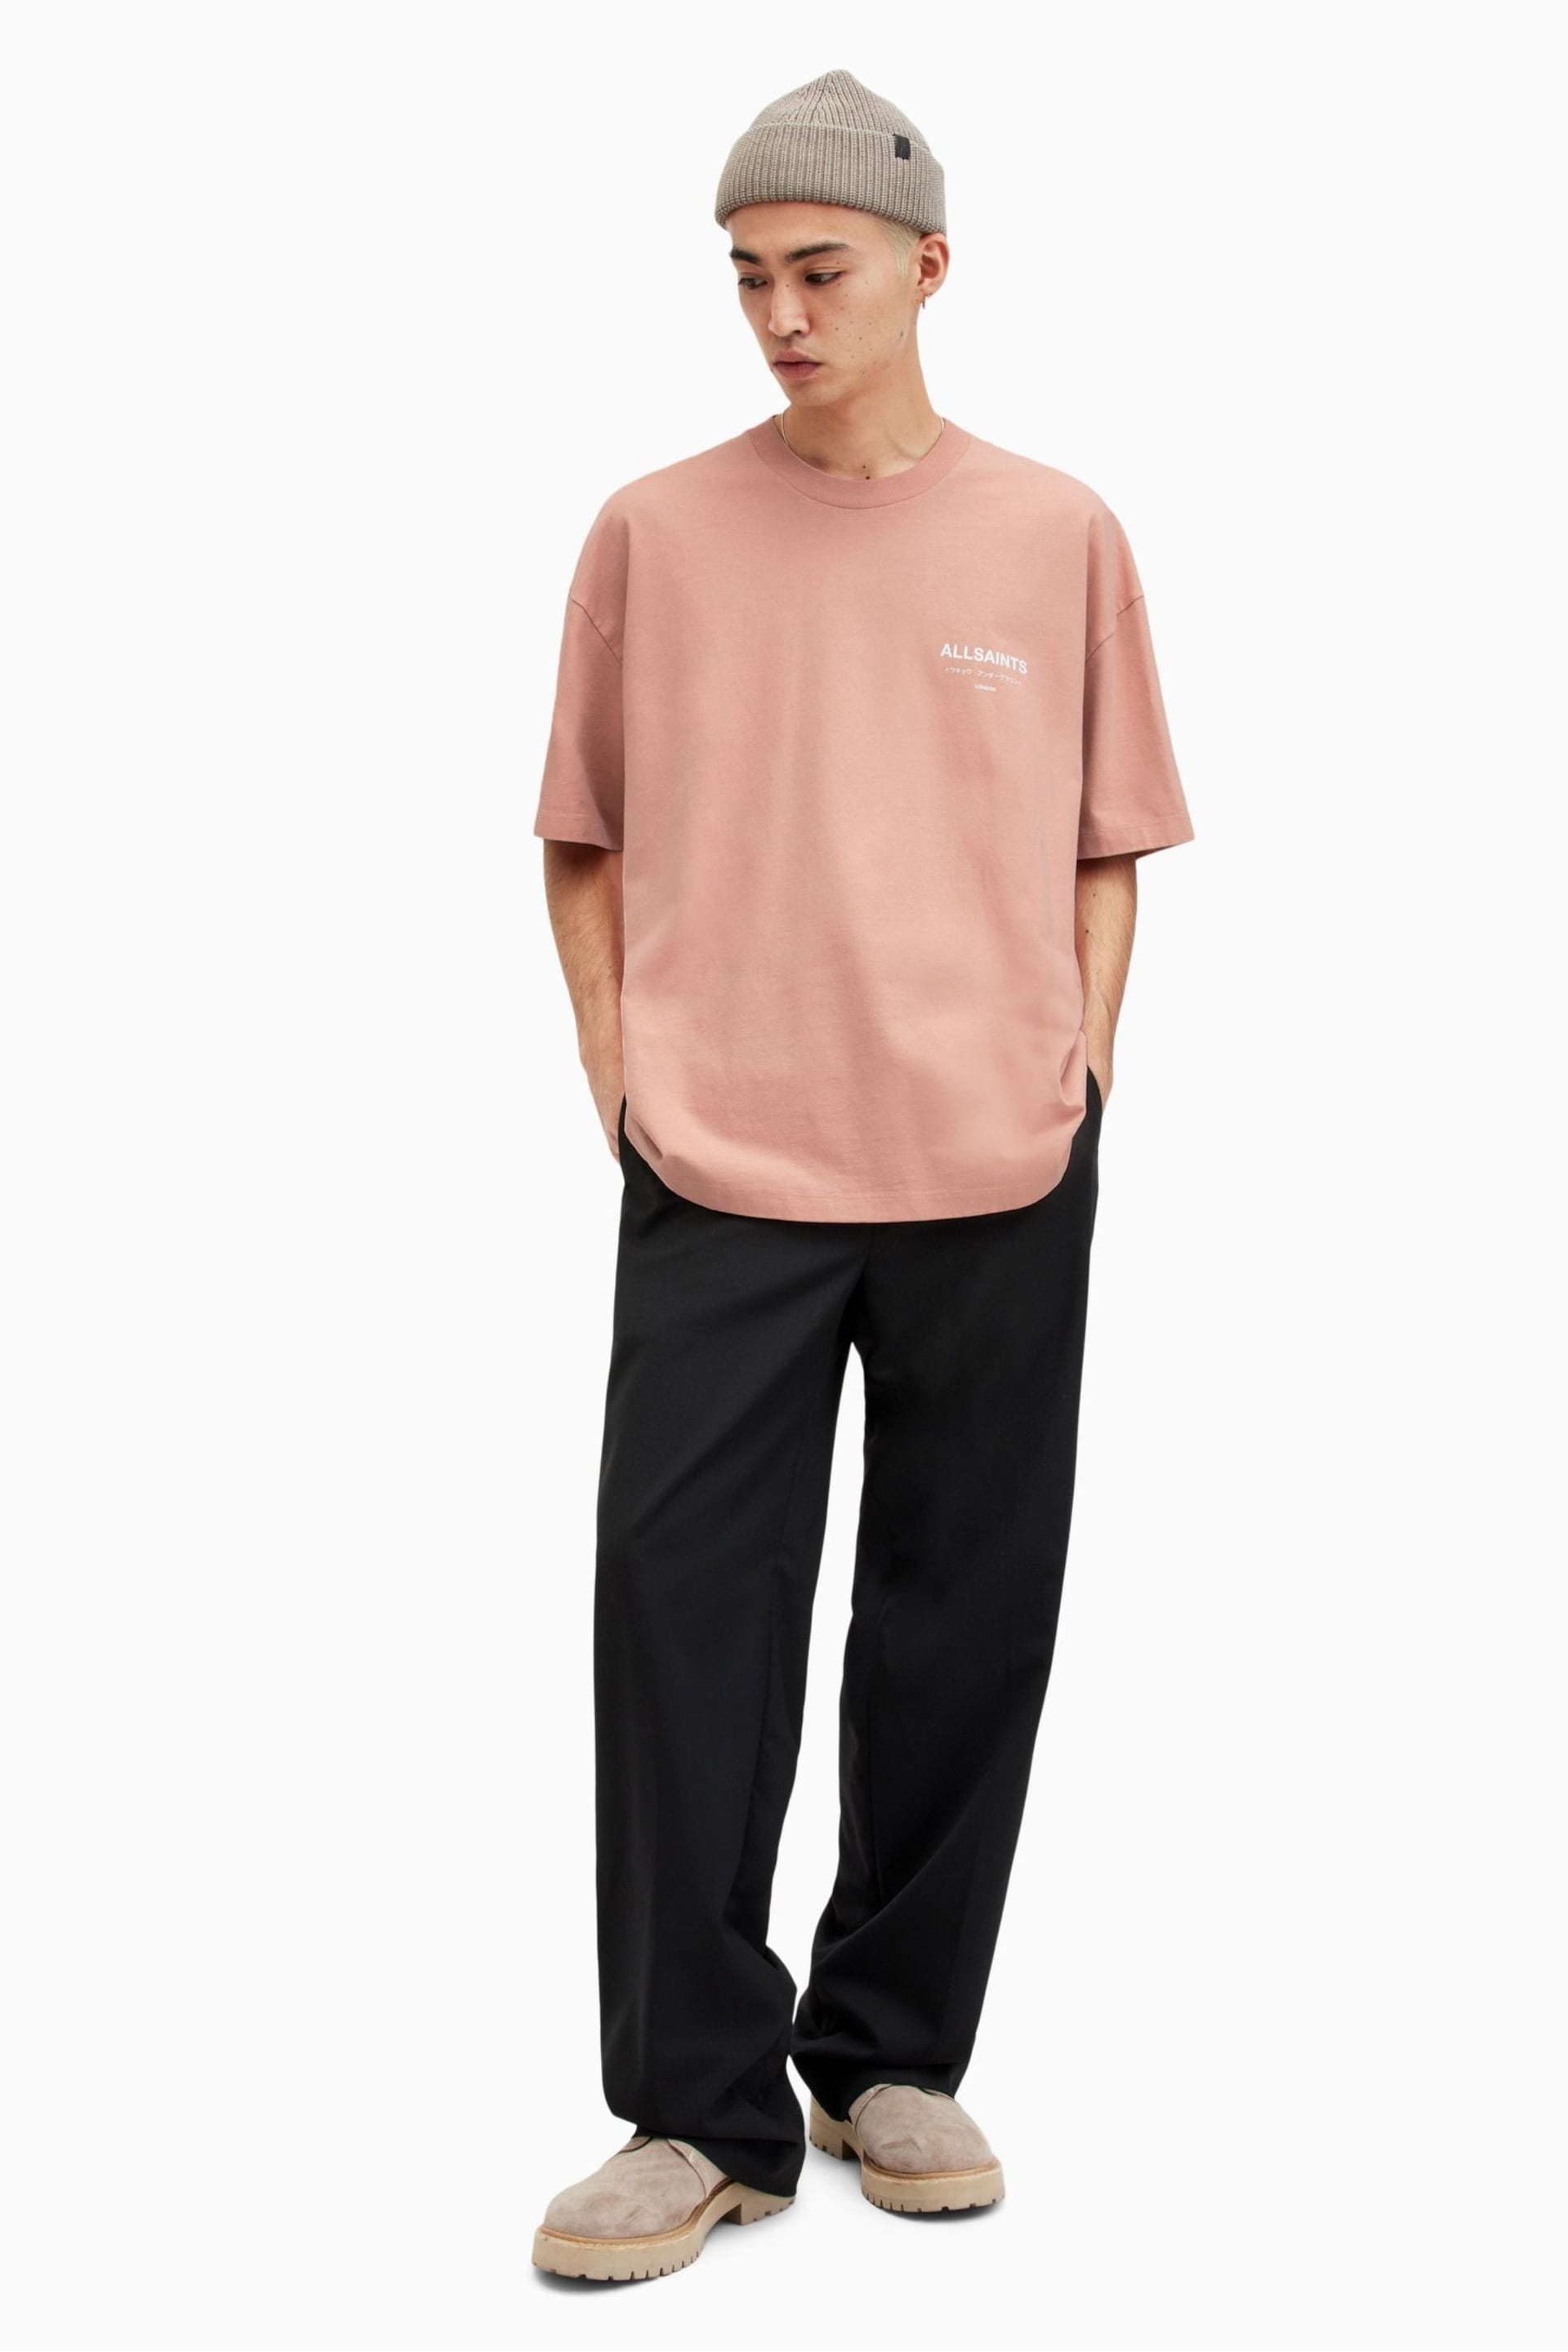 AllSaints Pink Underground Crew T-Shirt - Image 3 of 6